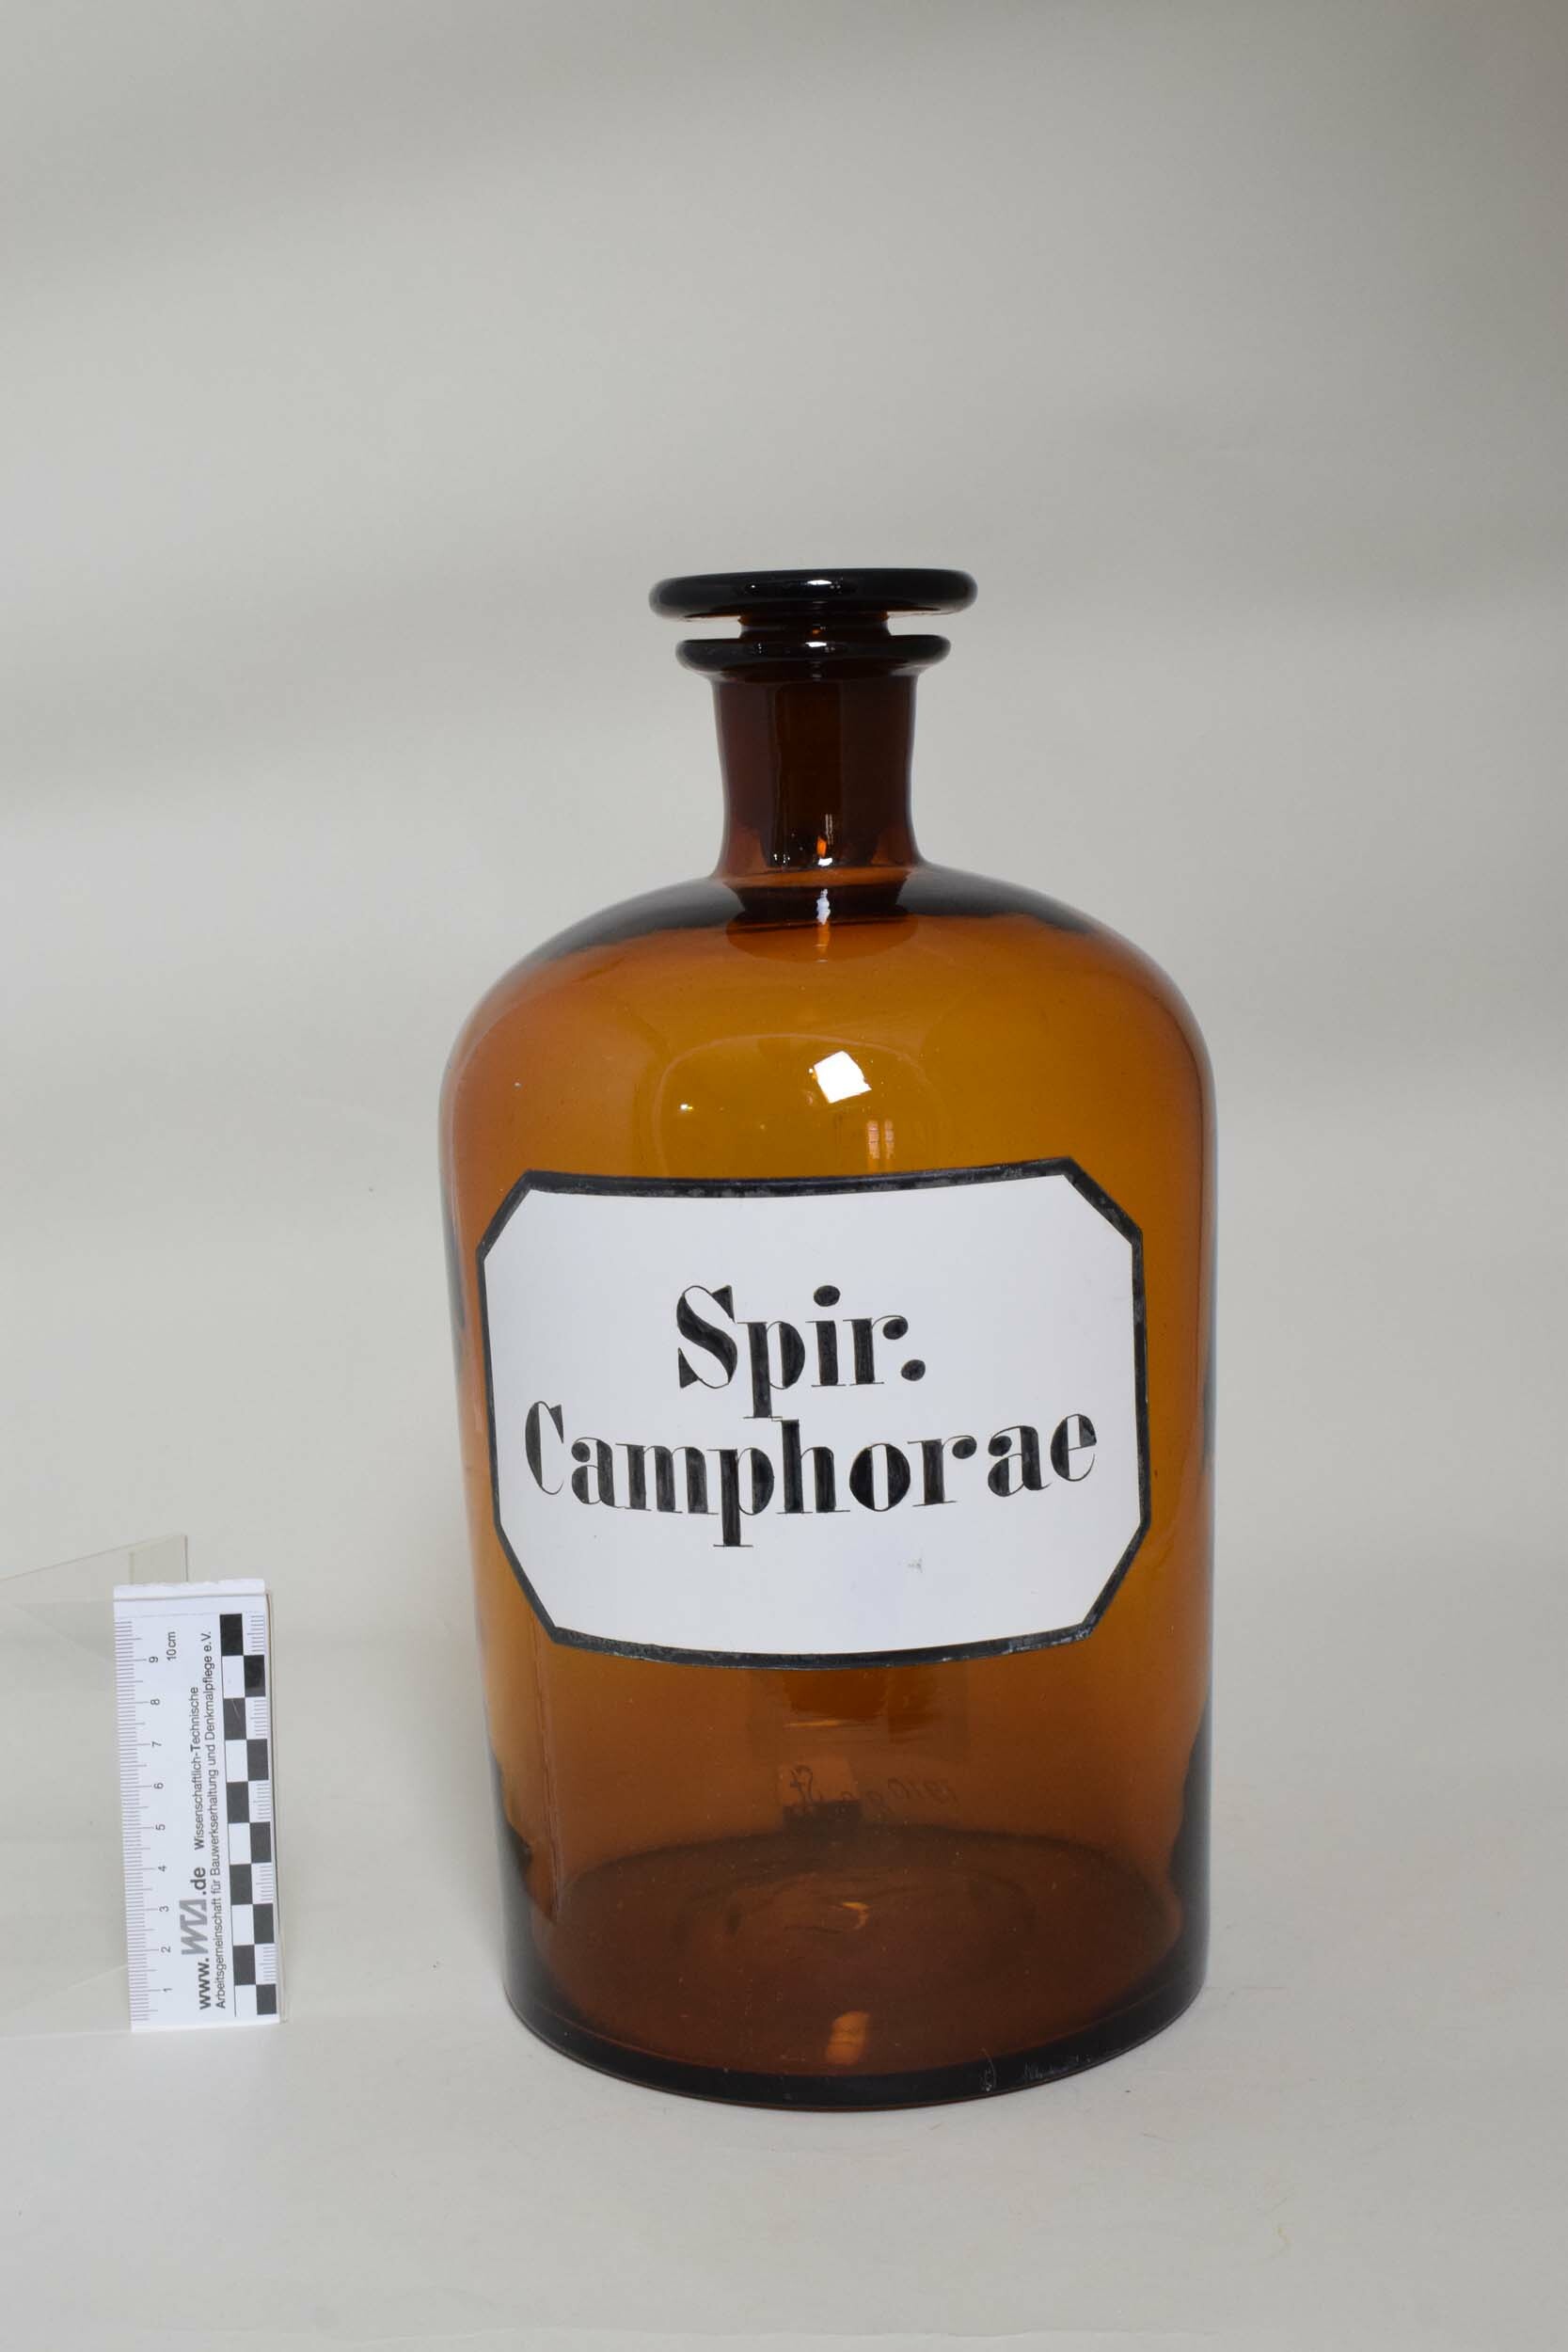 Apothekenflasche "Spir.Camphorae" (Heimatmuseum Dohna CC BY-NC-SA)